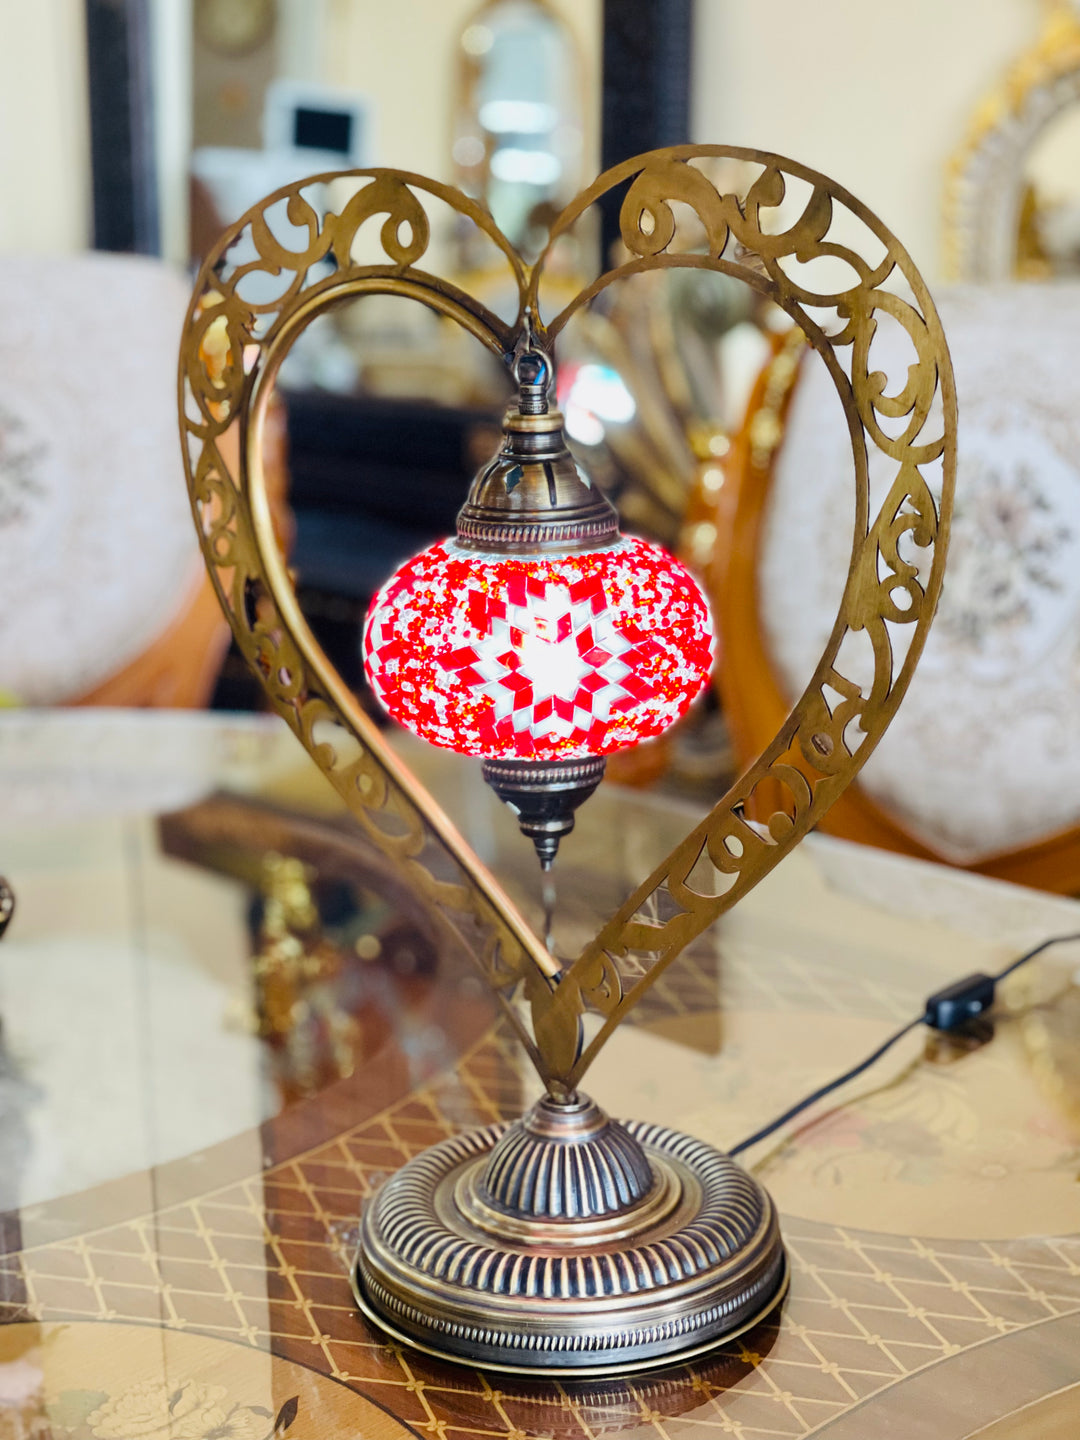 Handmade Turkish Heart shaped table lamp.